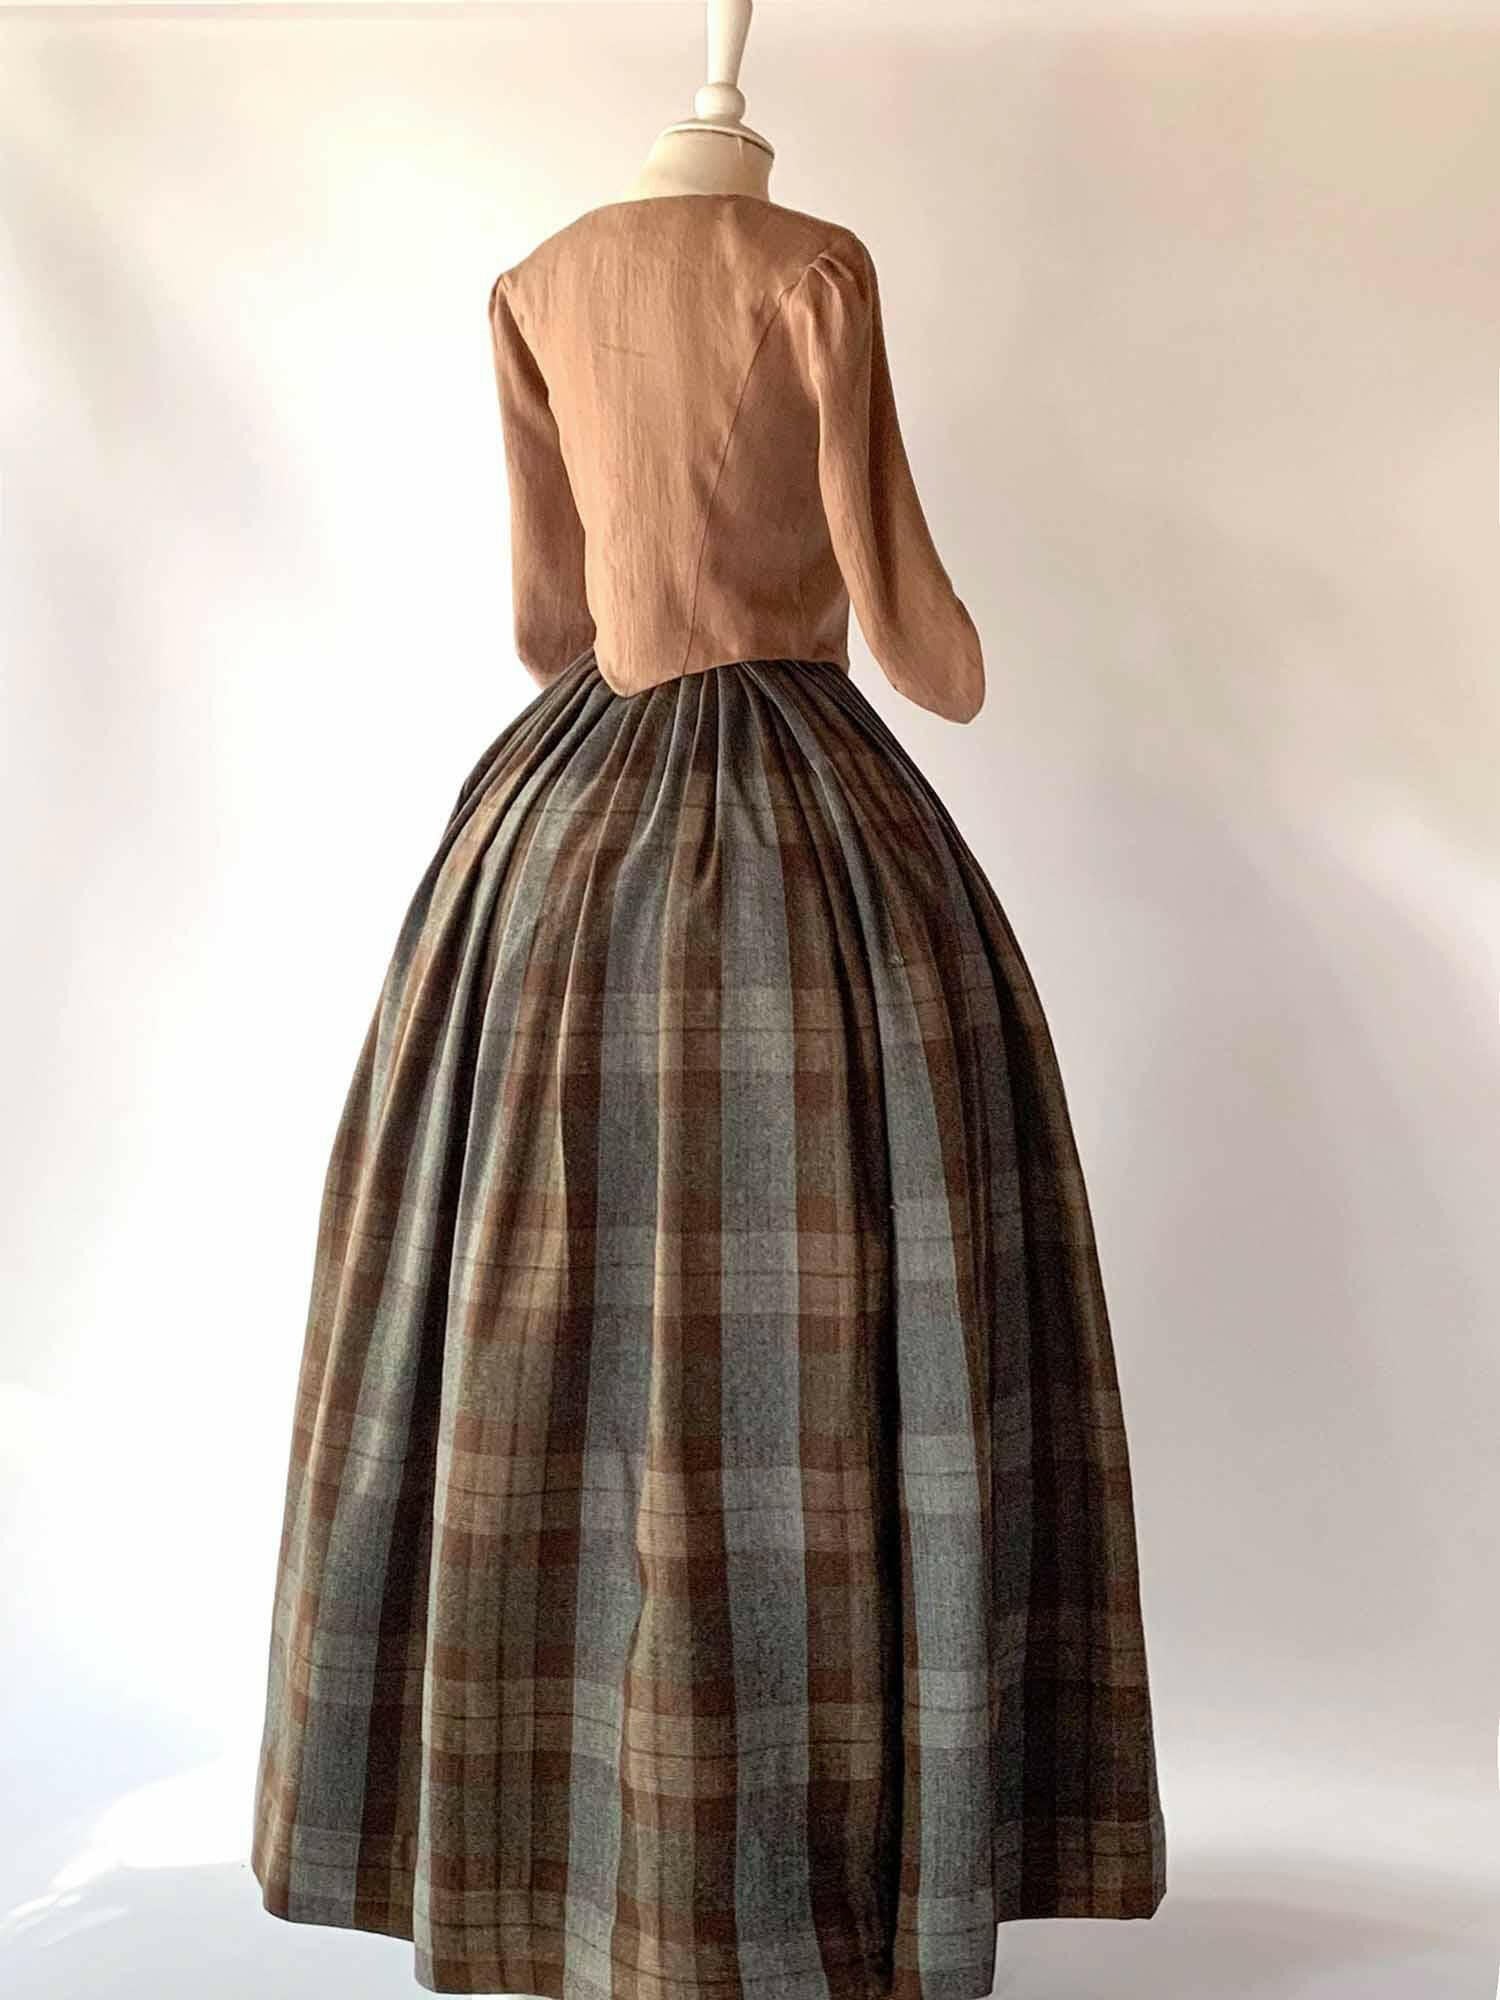 Outlander Costume Toffee Linen and Outlander Tartan Skirt - Atelier Serraspina